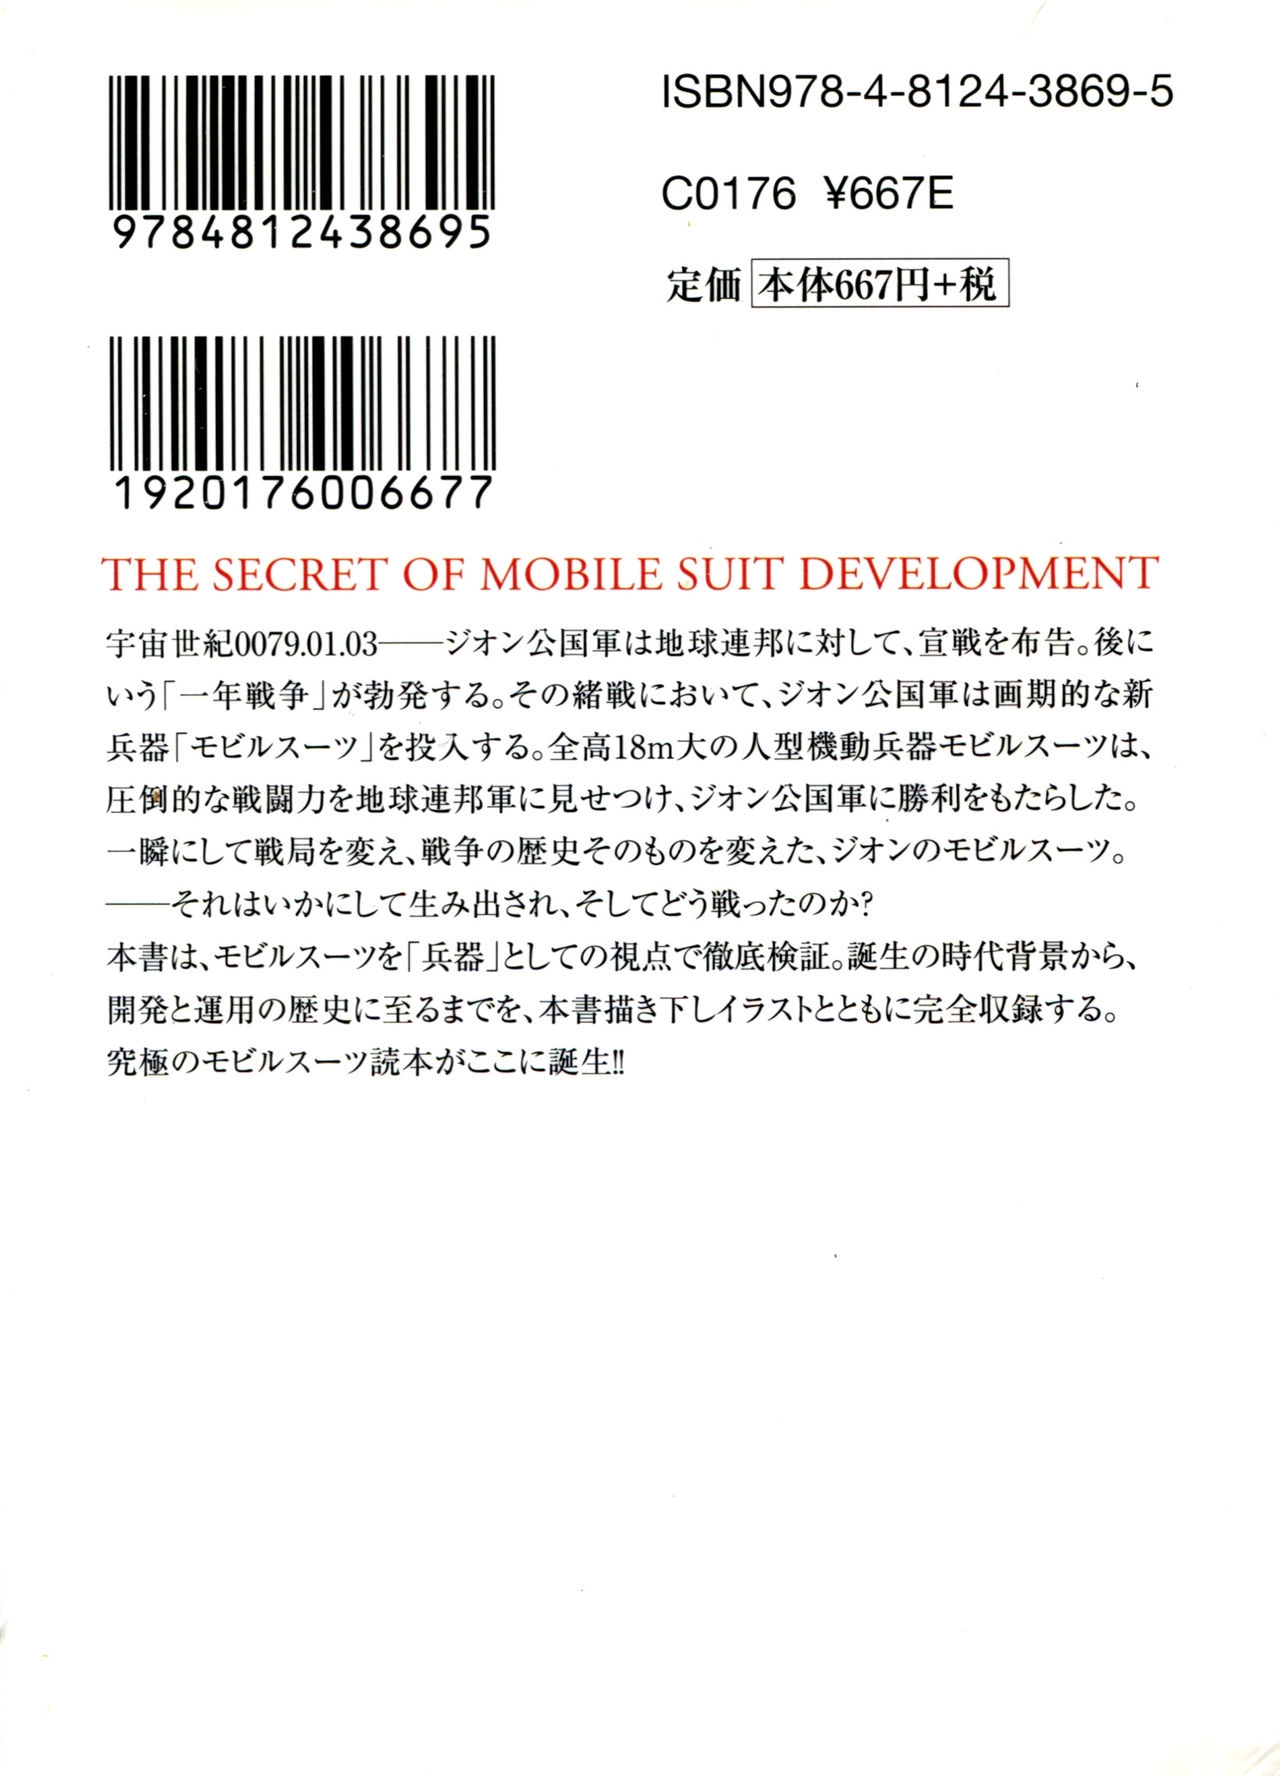 The Secret of Mobile Suit Development U.C.0075-0079 277